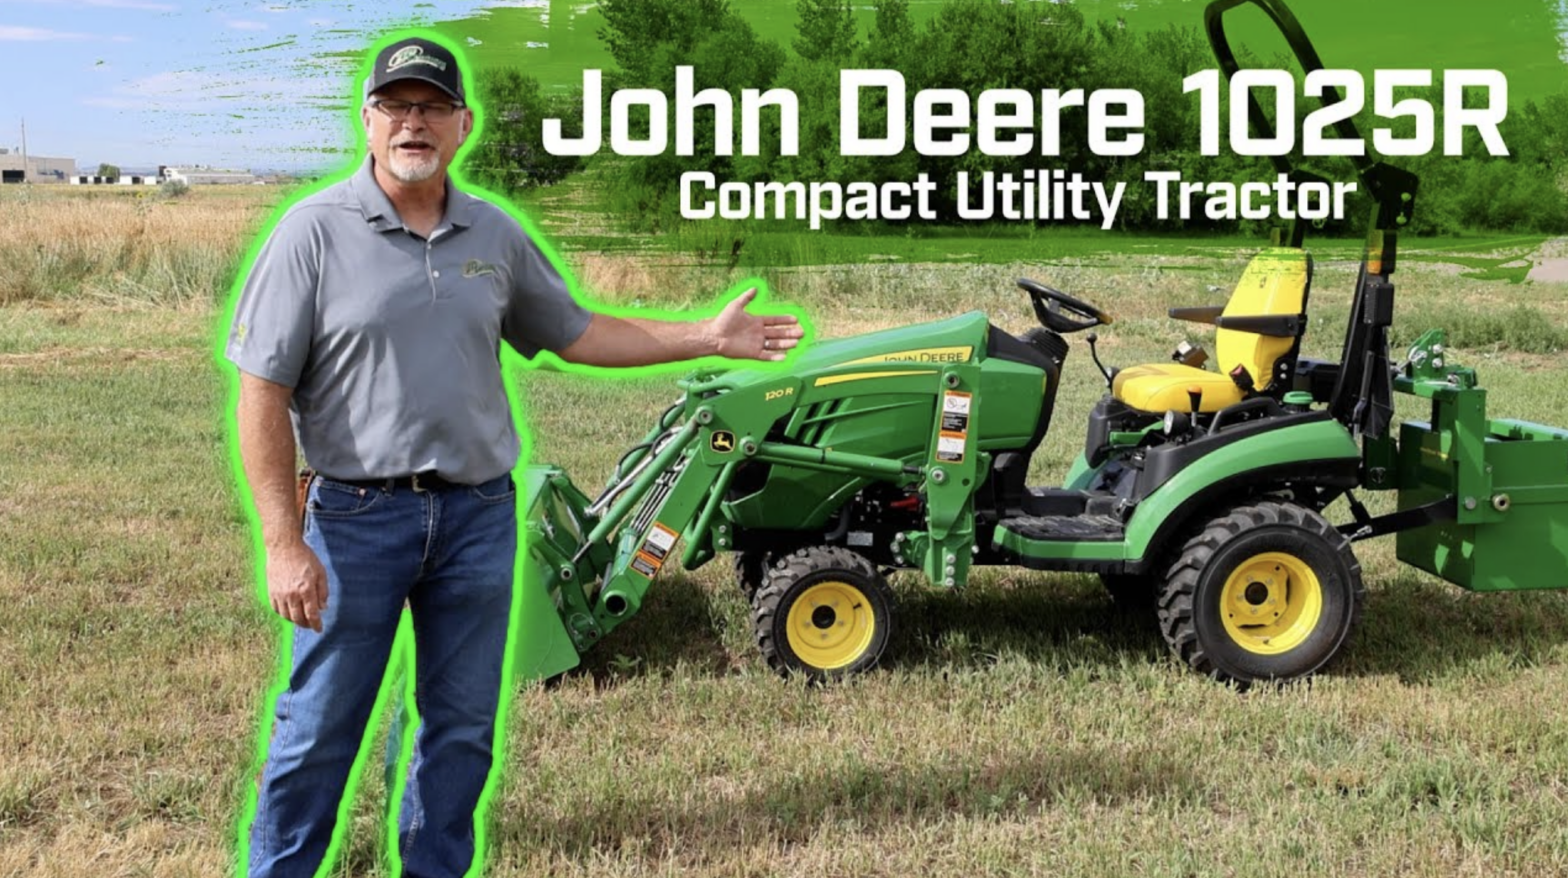 Exploring the John Deere 1025R Tractor with 21st Century Equipment